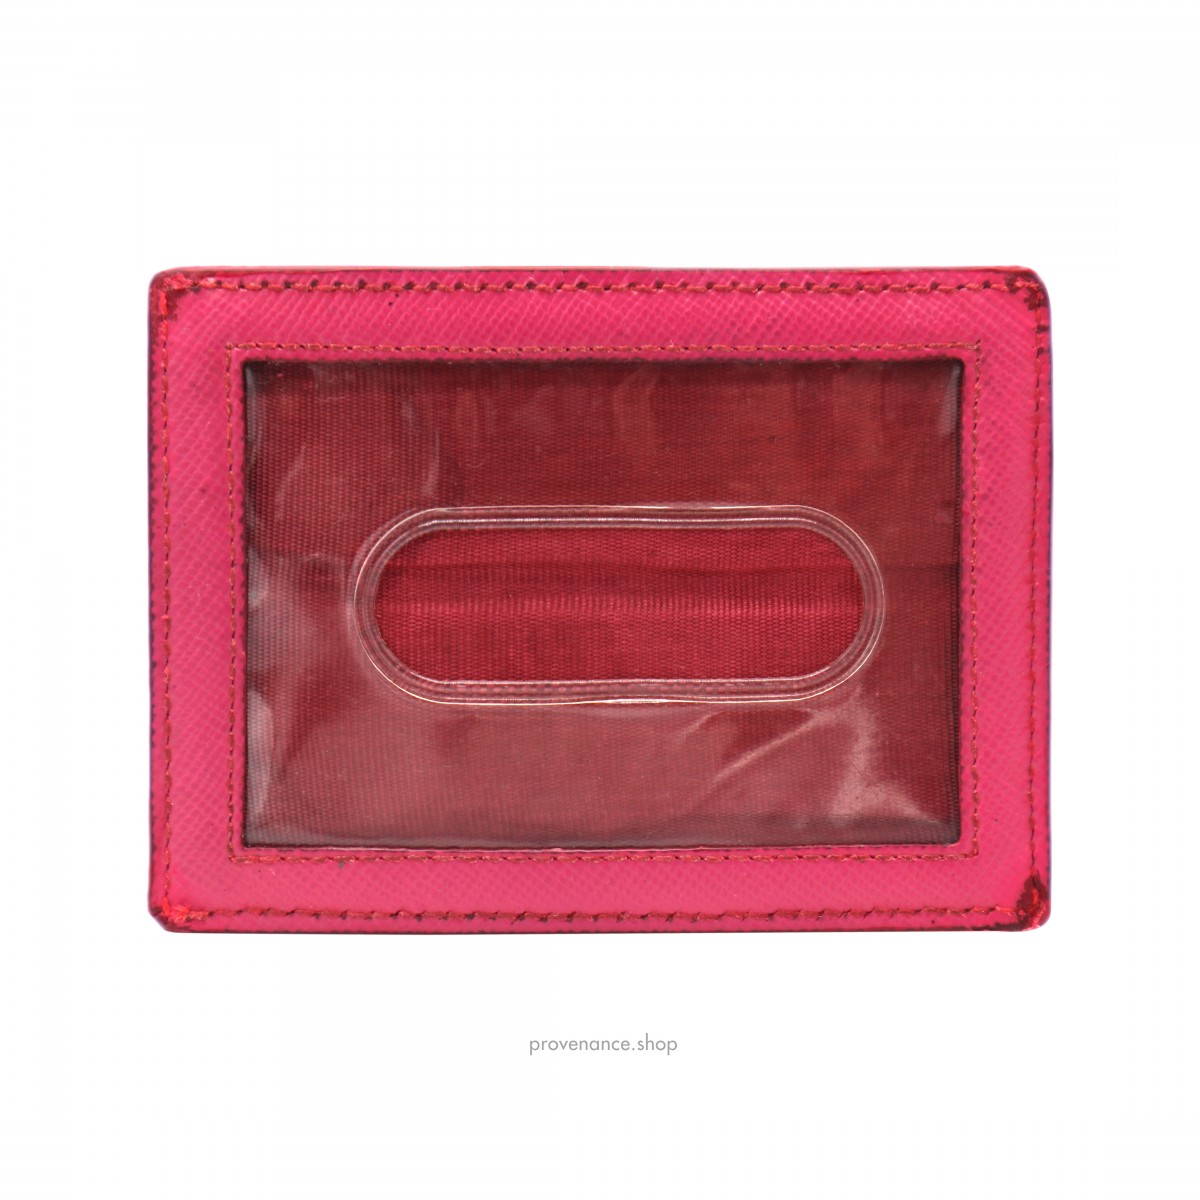 Prada Cardholder Wallet - Fuchsia Saffiano Leather - 2